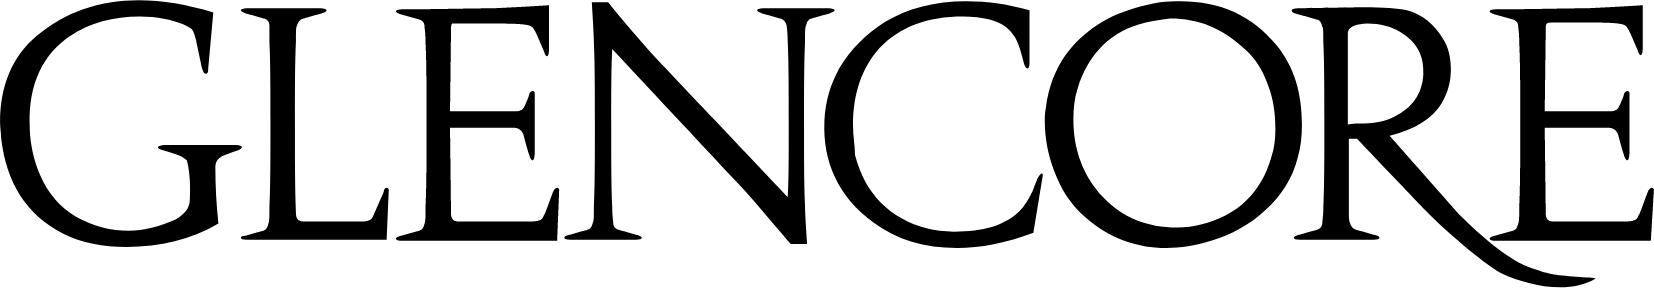 Glencore logo large (transparent PNG)